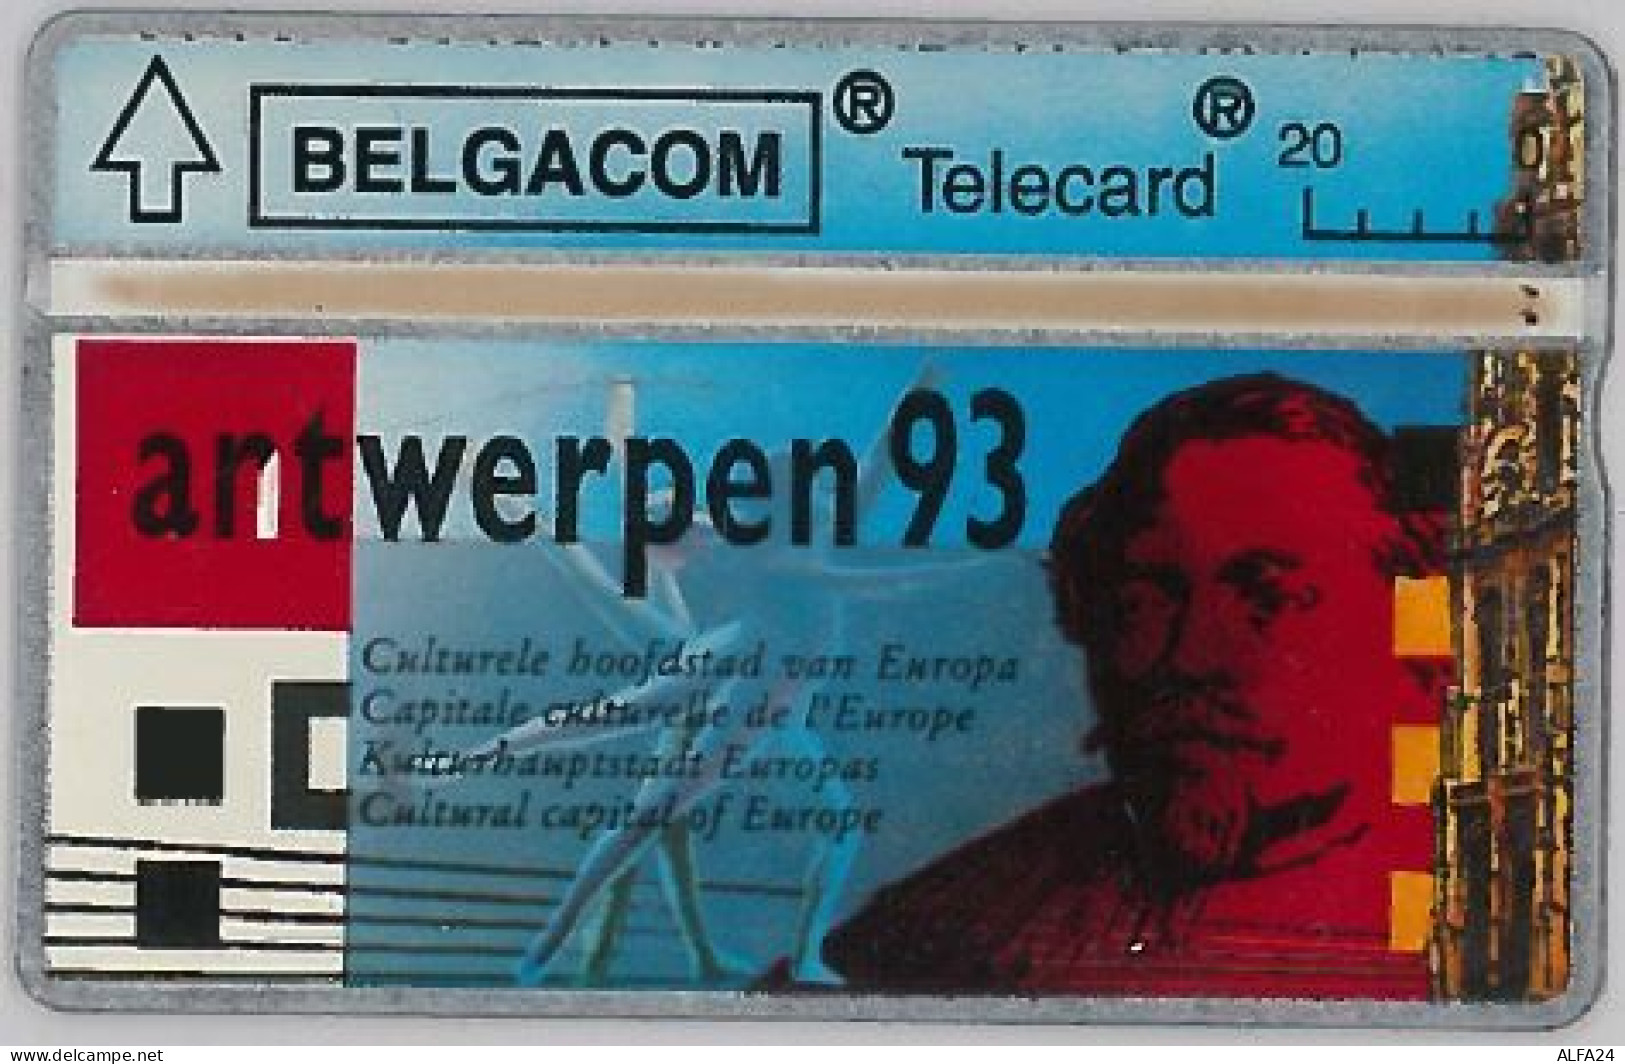 PHONE CARD - BELGIO (H.7.3 - Senza Chip